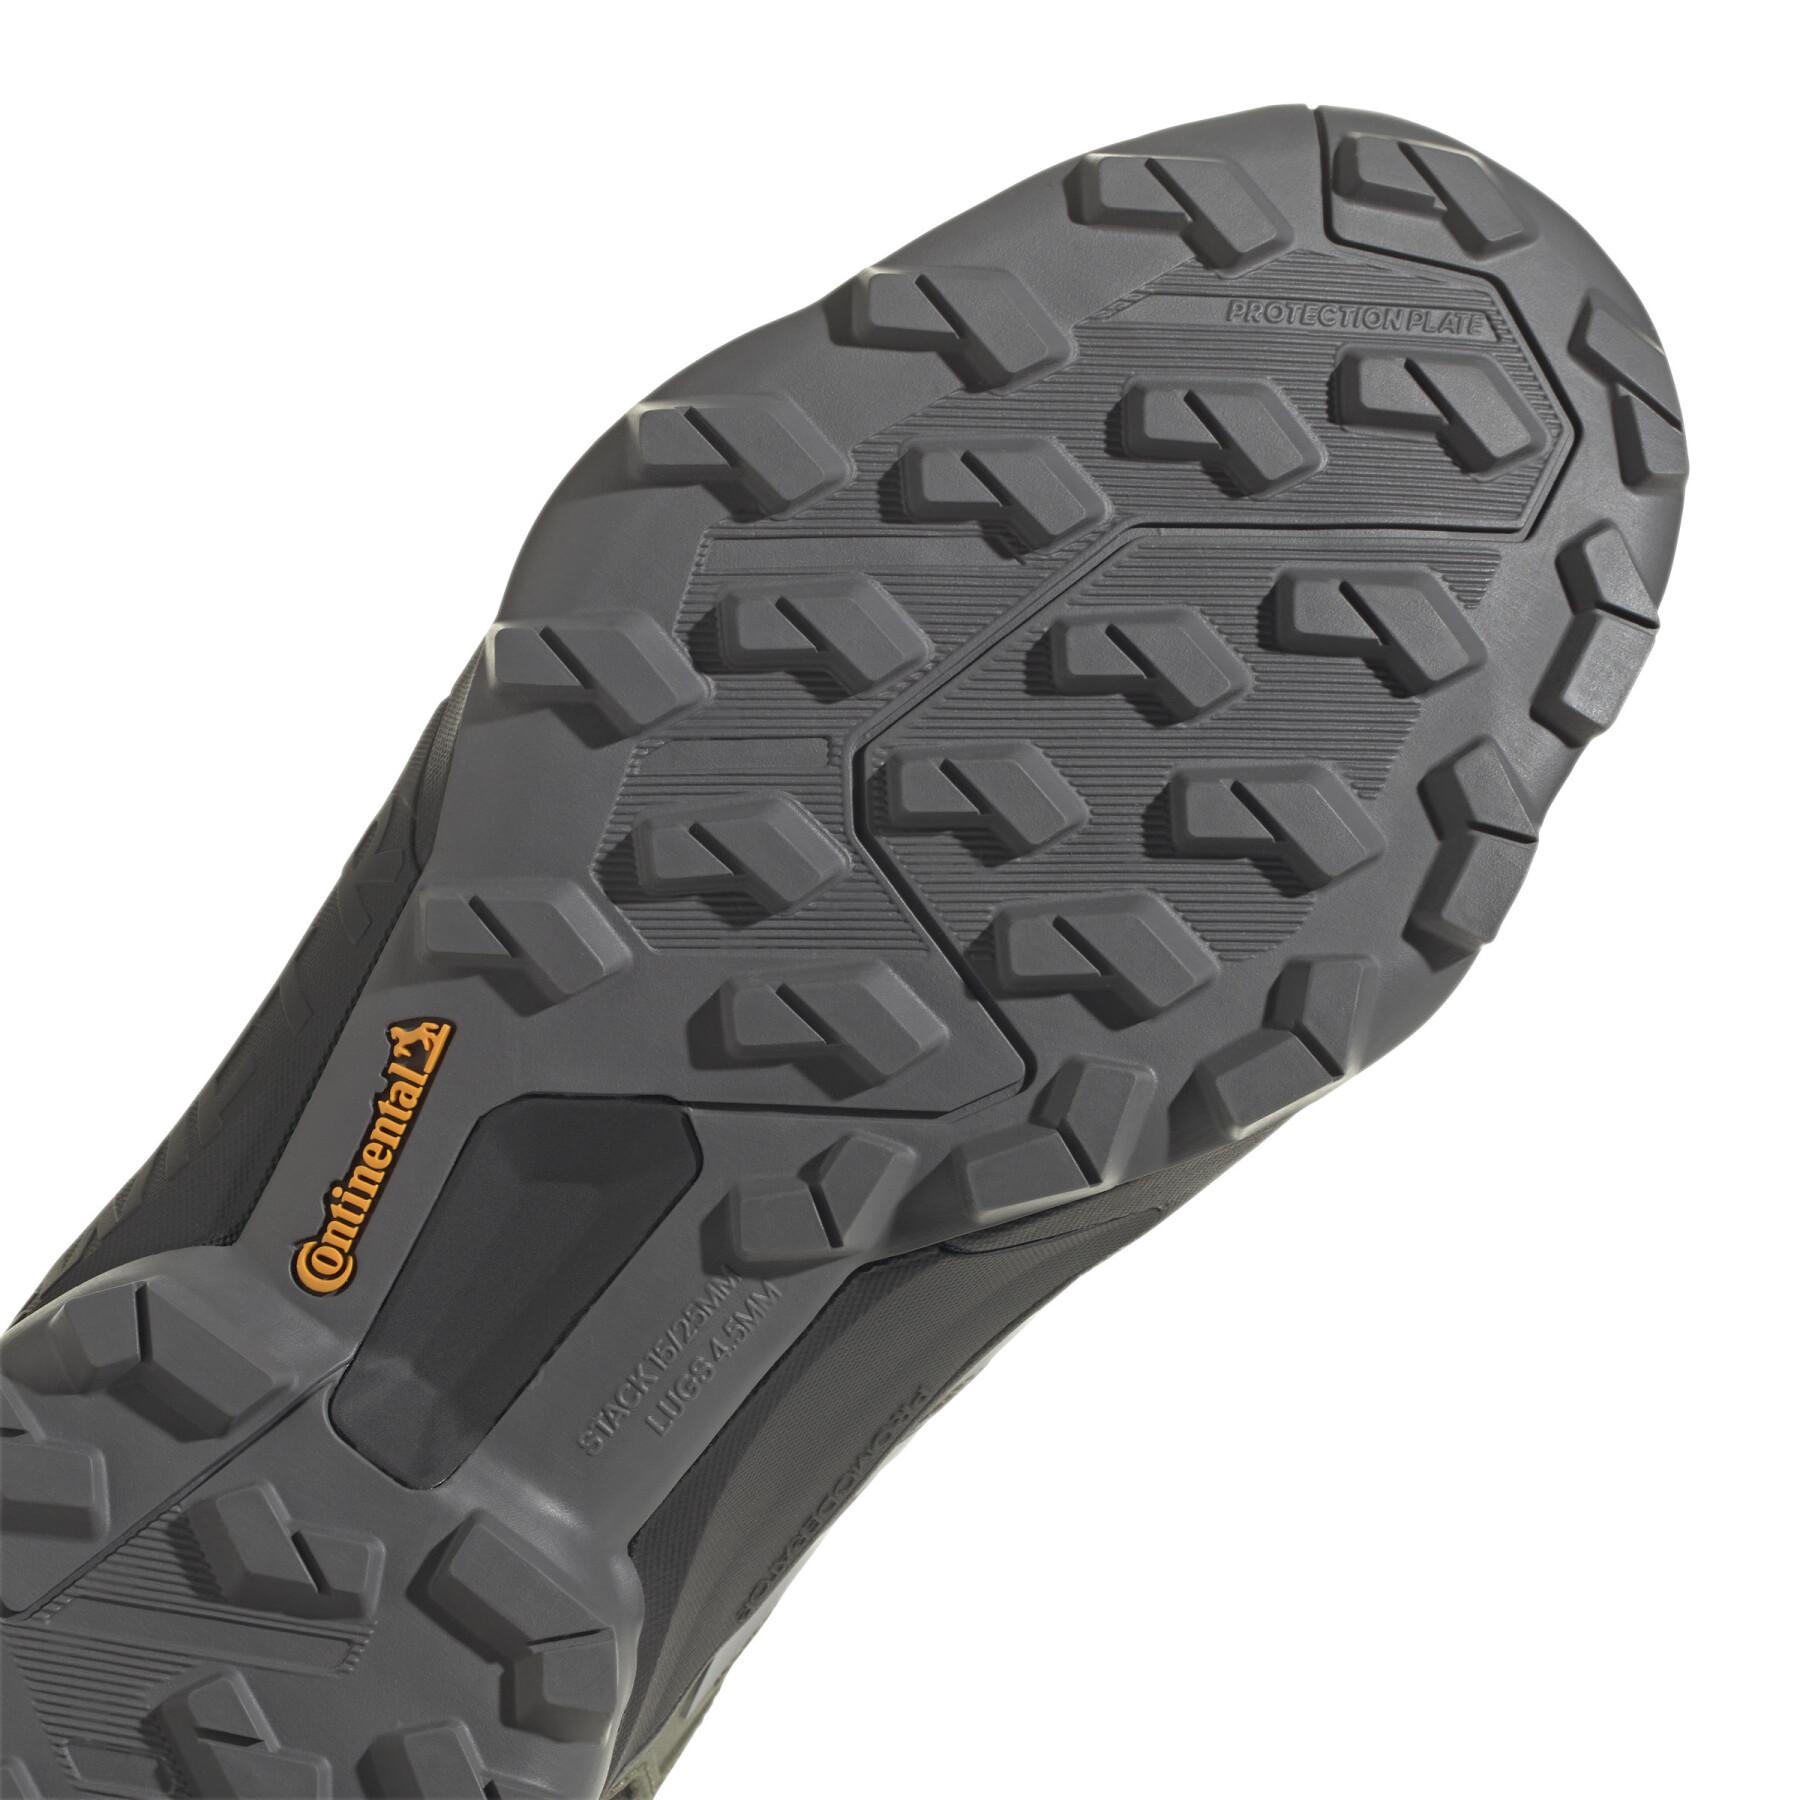 Chaussures de randonnée adidas Terrex Swift R3 Gore-Tex